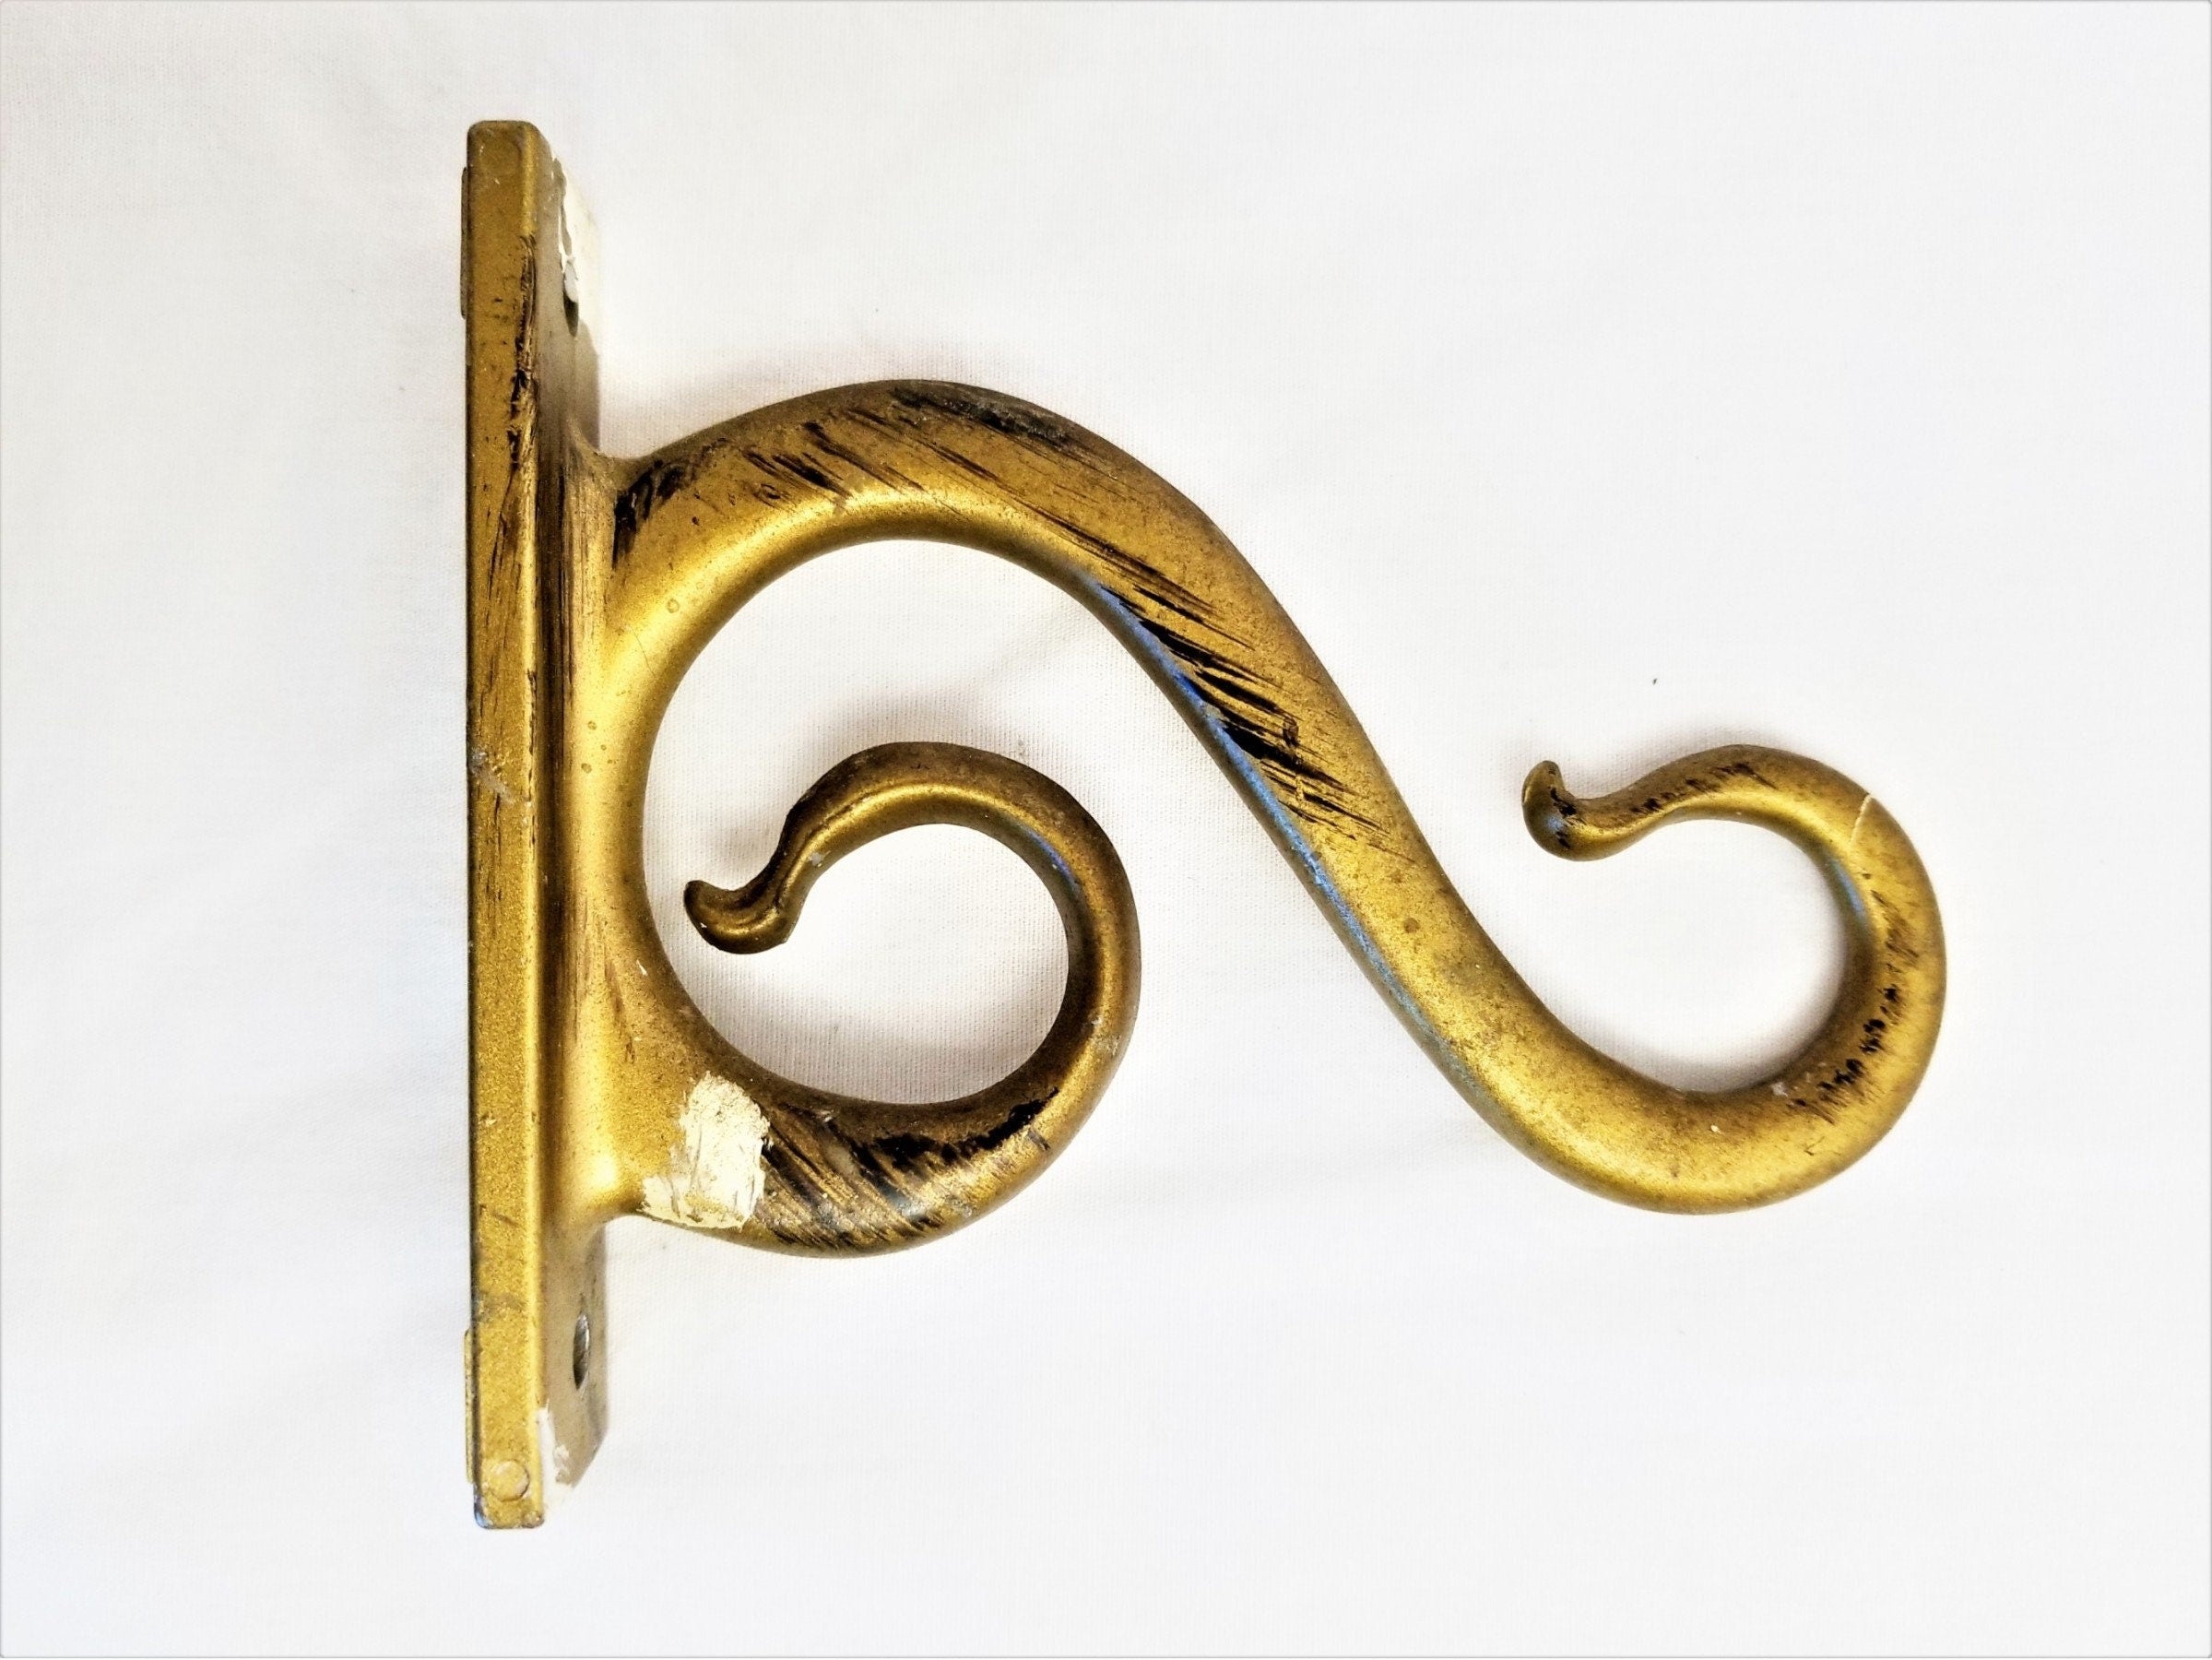 Set of 4 Vintage Swirl S Metal Coat Hooks | Unique Stylized Gold Spiral Wall Mount Hanger | Bathroom Towel Hooks | Entryway Mudroom Hardware